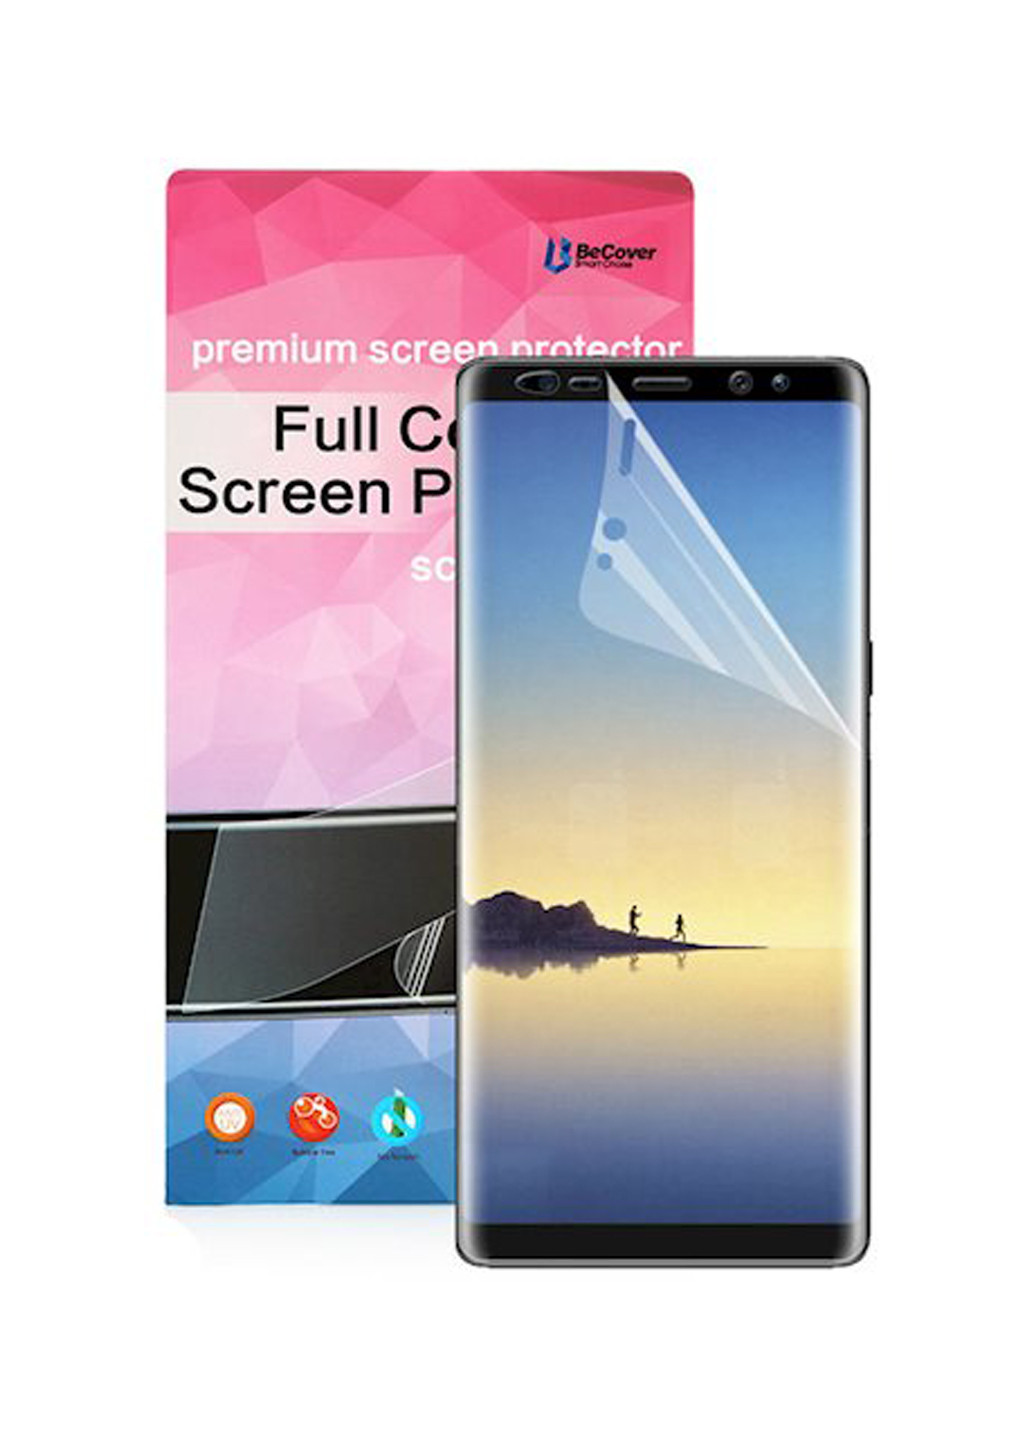 Захисна броньована плівка Full Cover для Samsung Galaxy A8 + 2018 SM-A730 (701953) BeCover full cover для samsung galaxy a8+ 2018 sm-a730 (701953) (145252210)